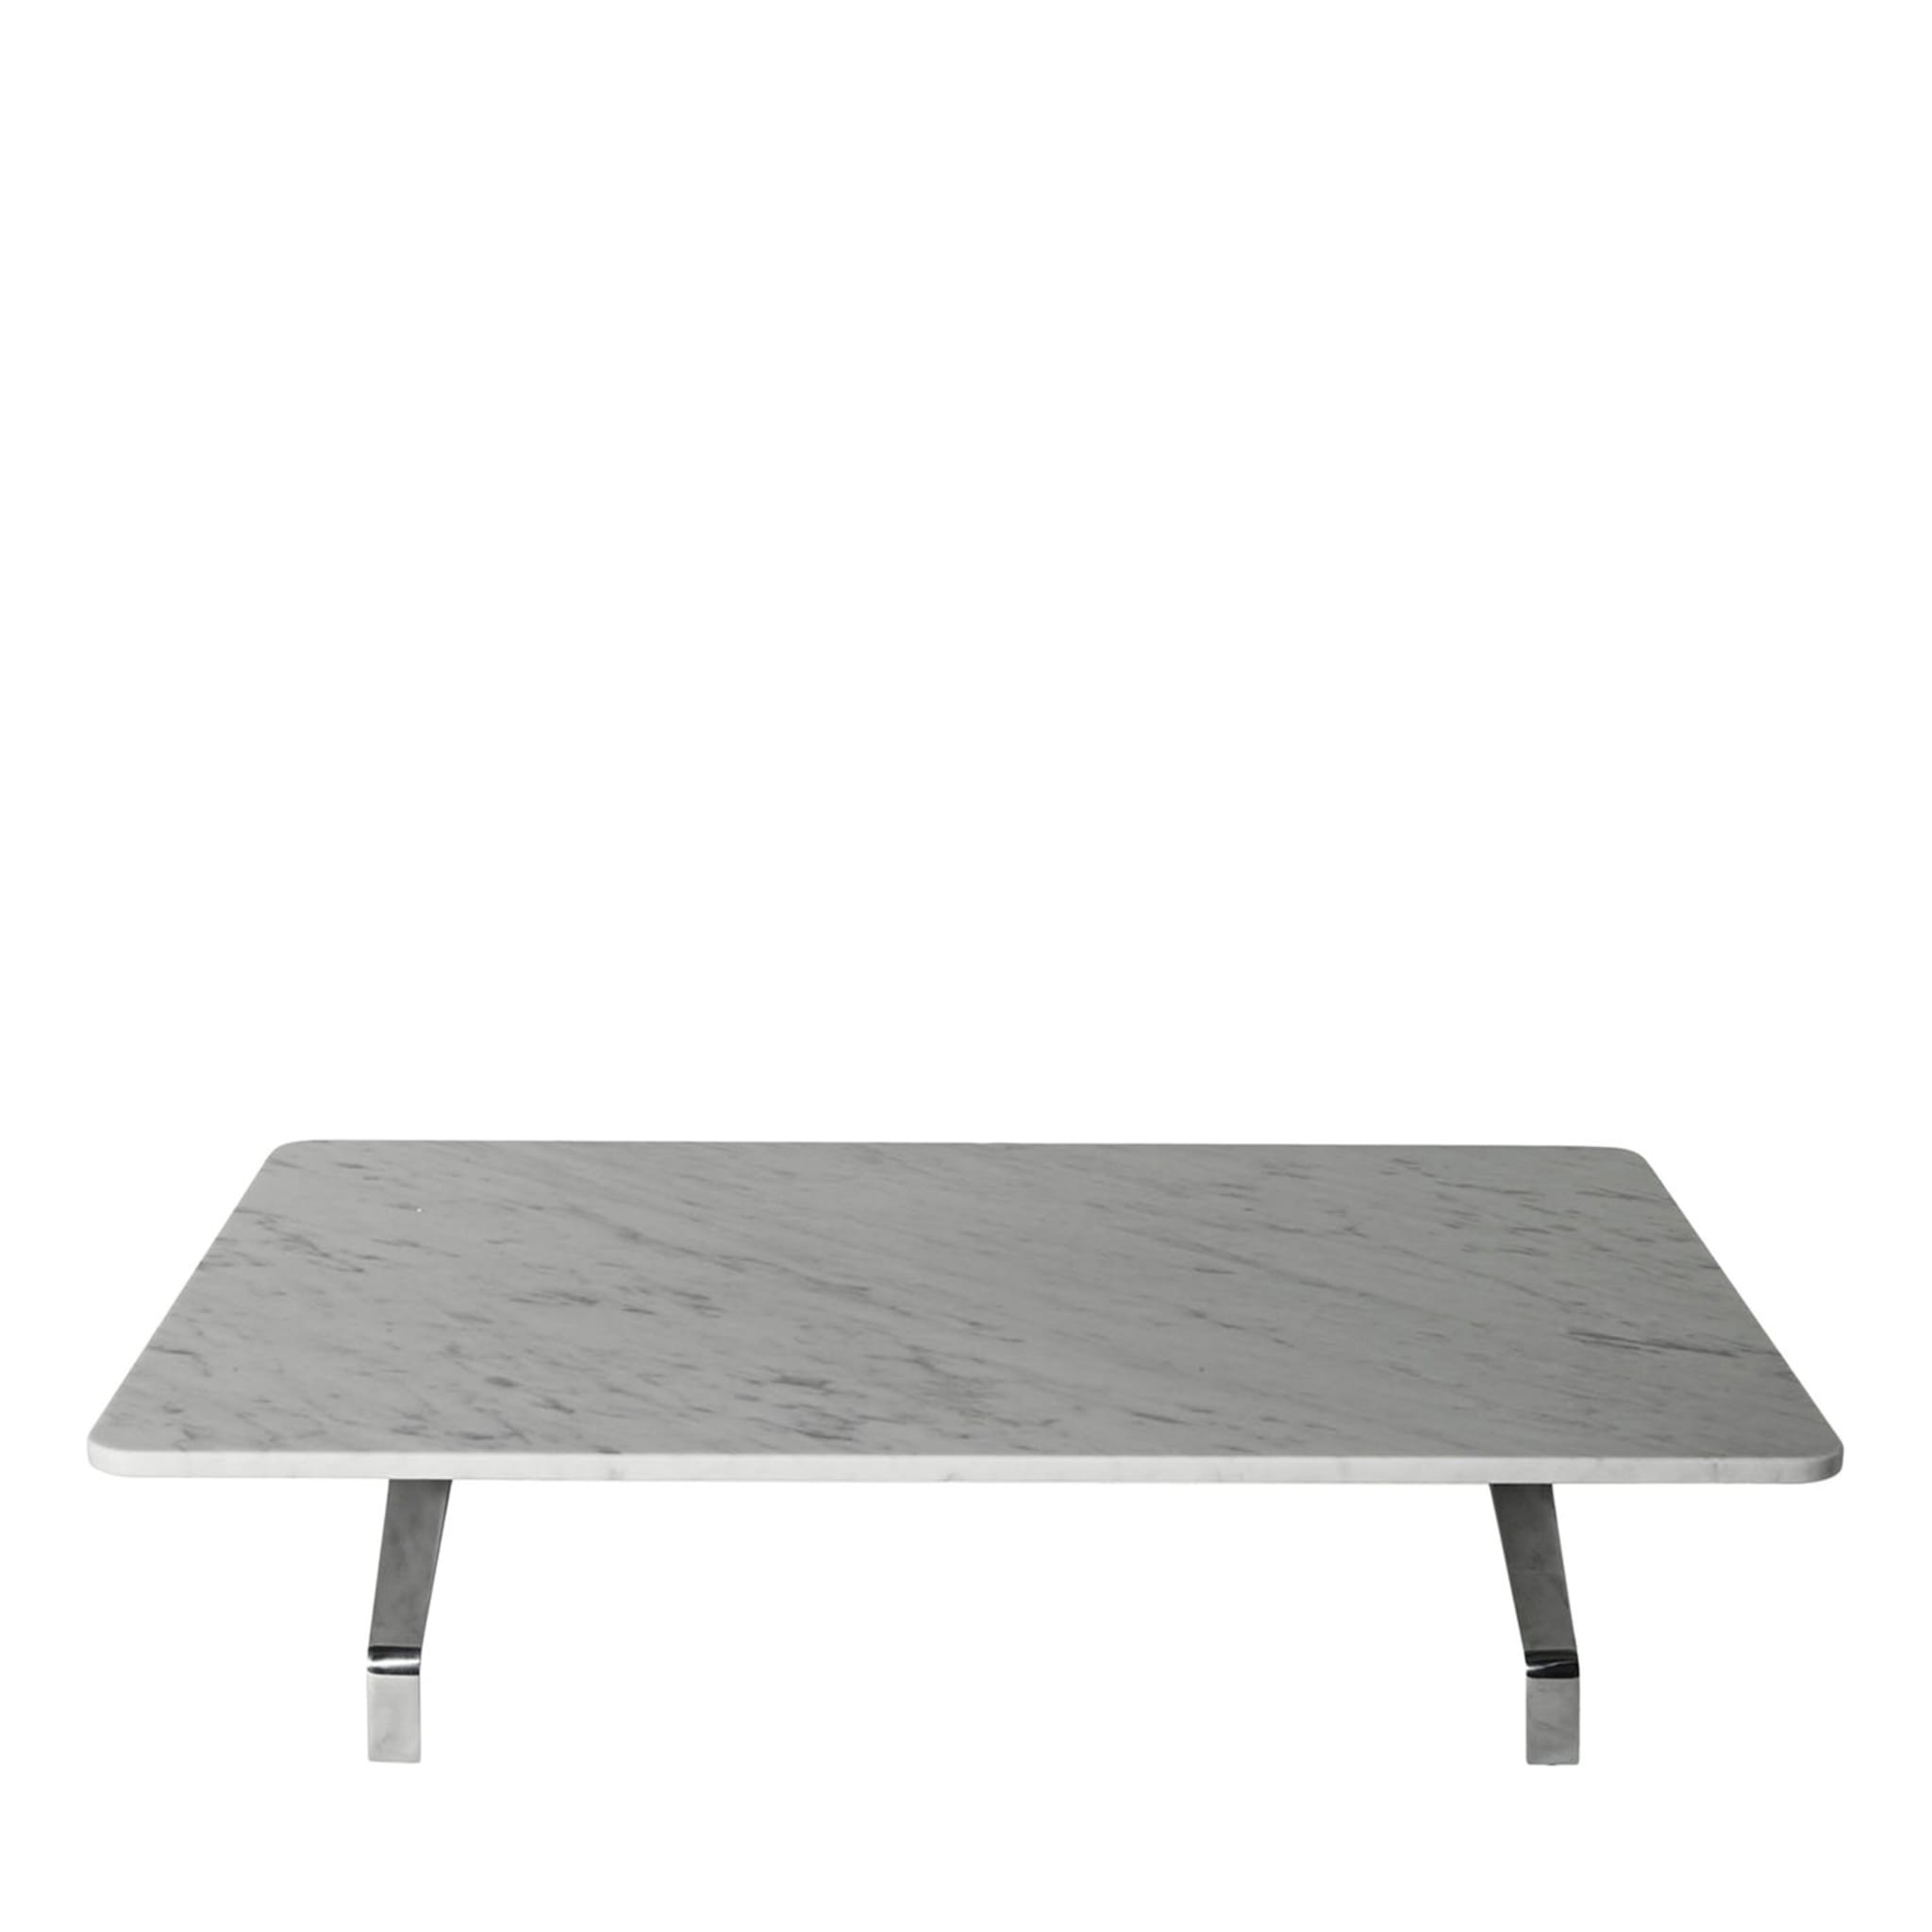 Petite table en marbre blanc Pons par Rodolfo Dordoni - Vue principale